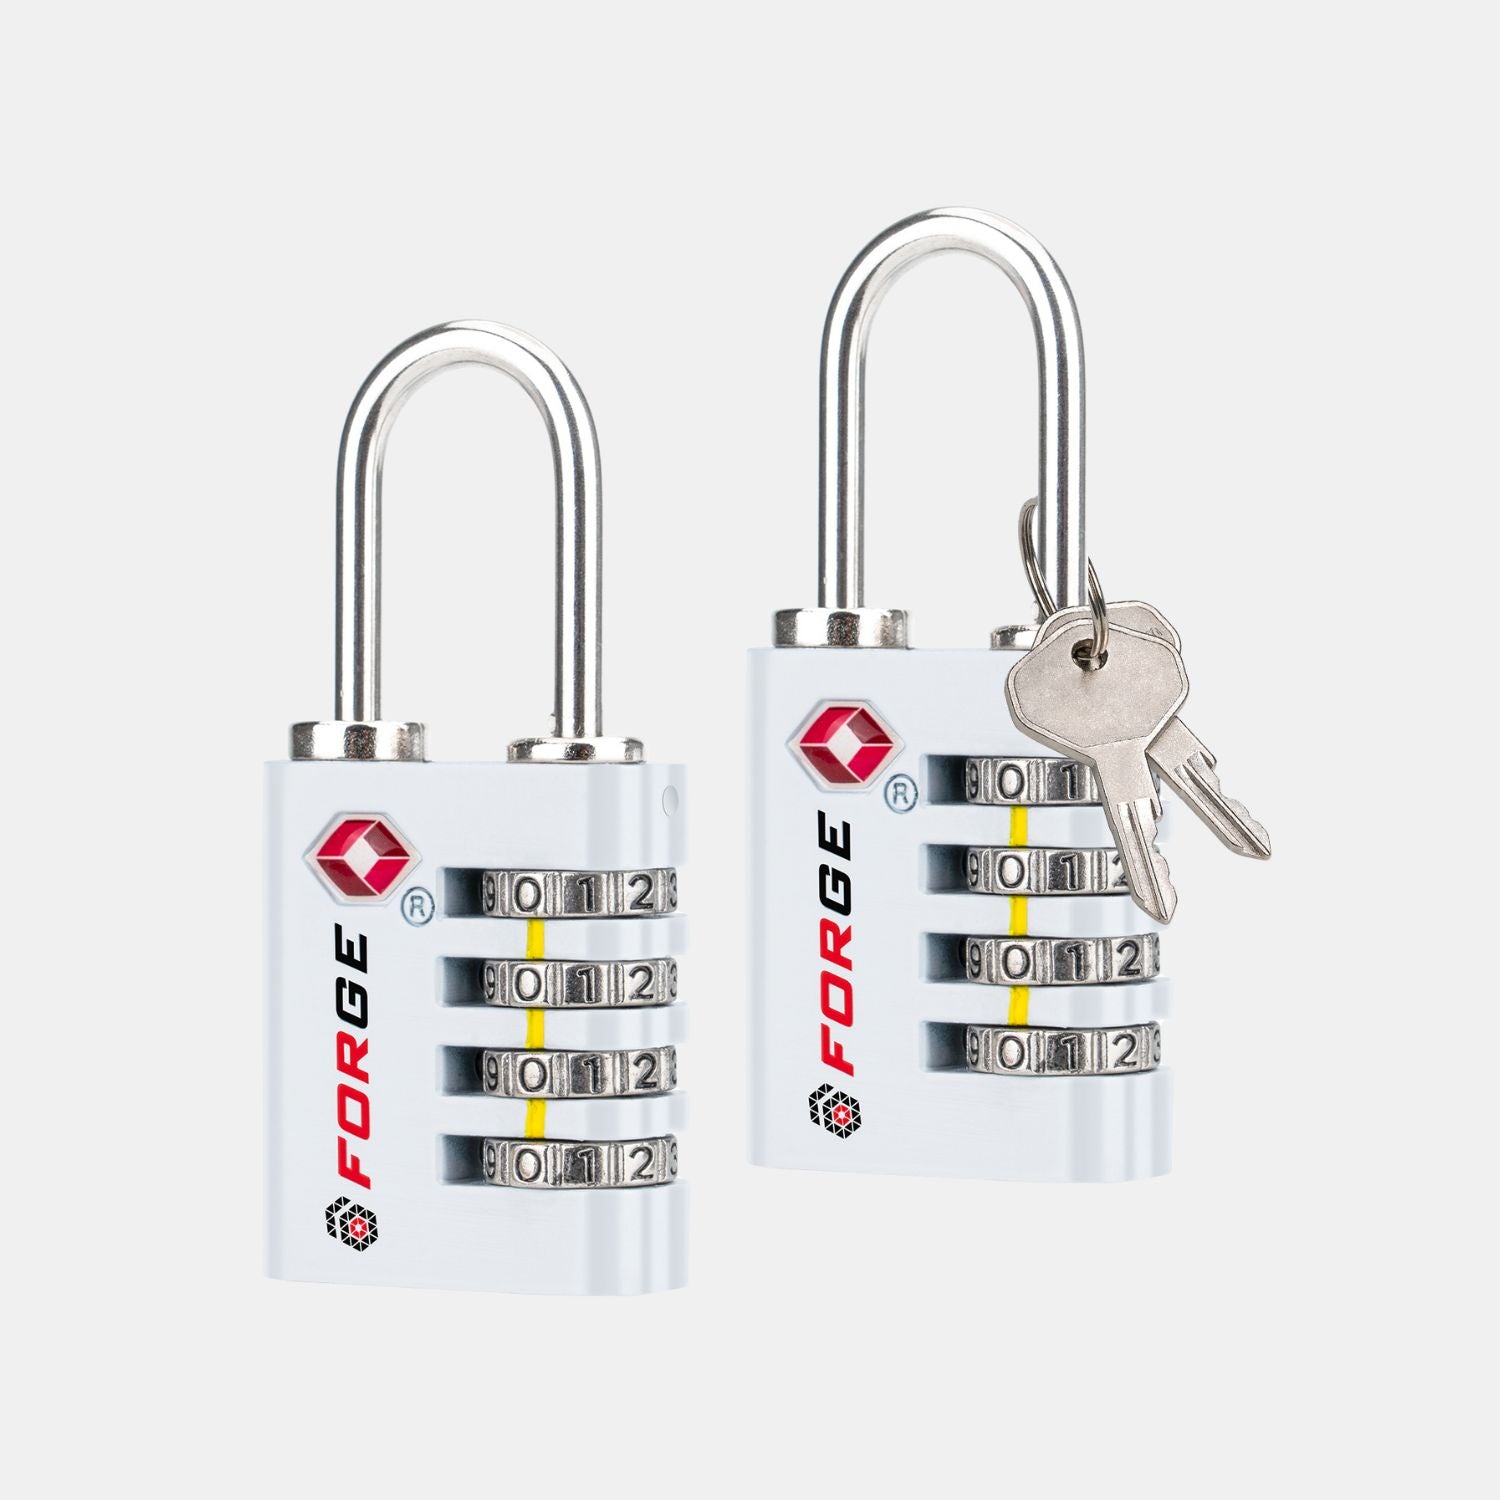 Dual-Opening TSA Approved Luggage Lock: Key or Combination Access, Heavy Duty. 2 white Locks